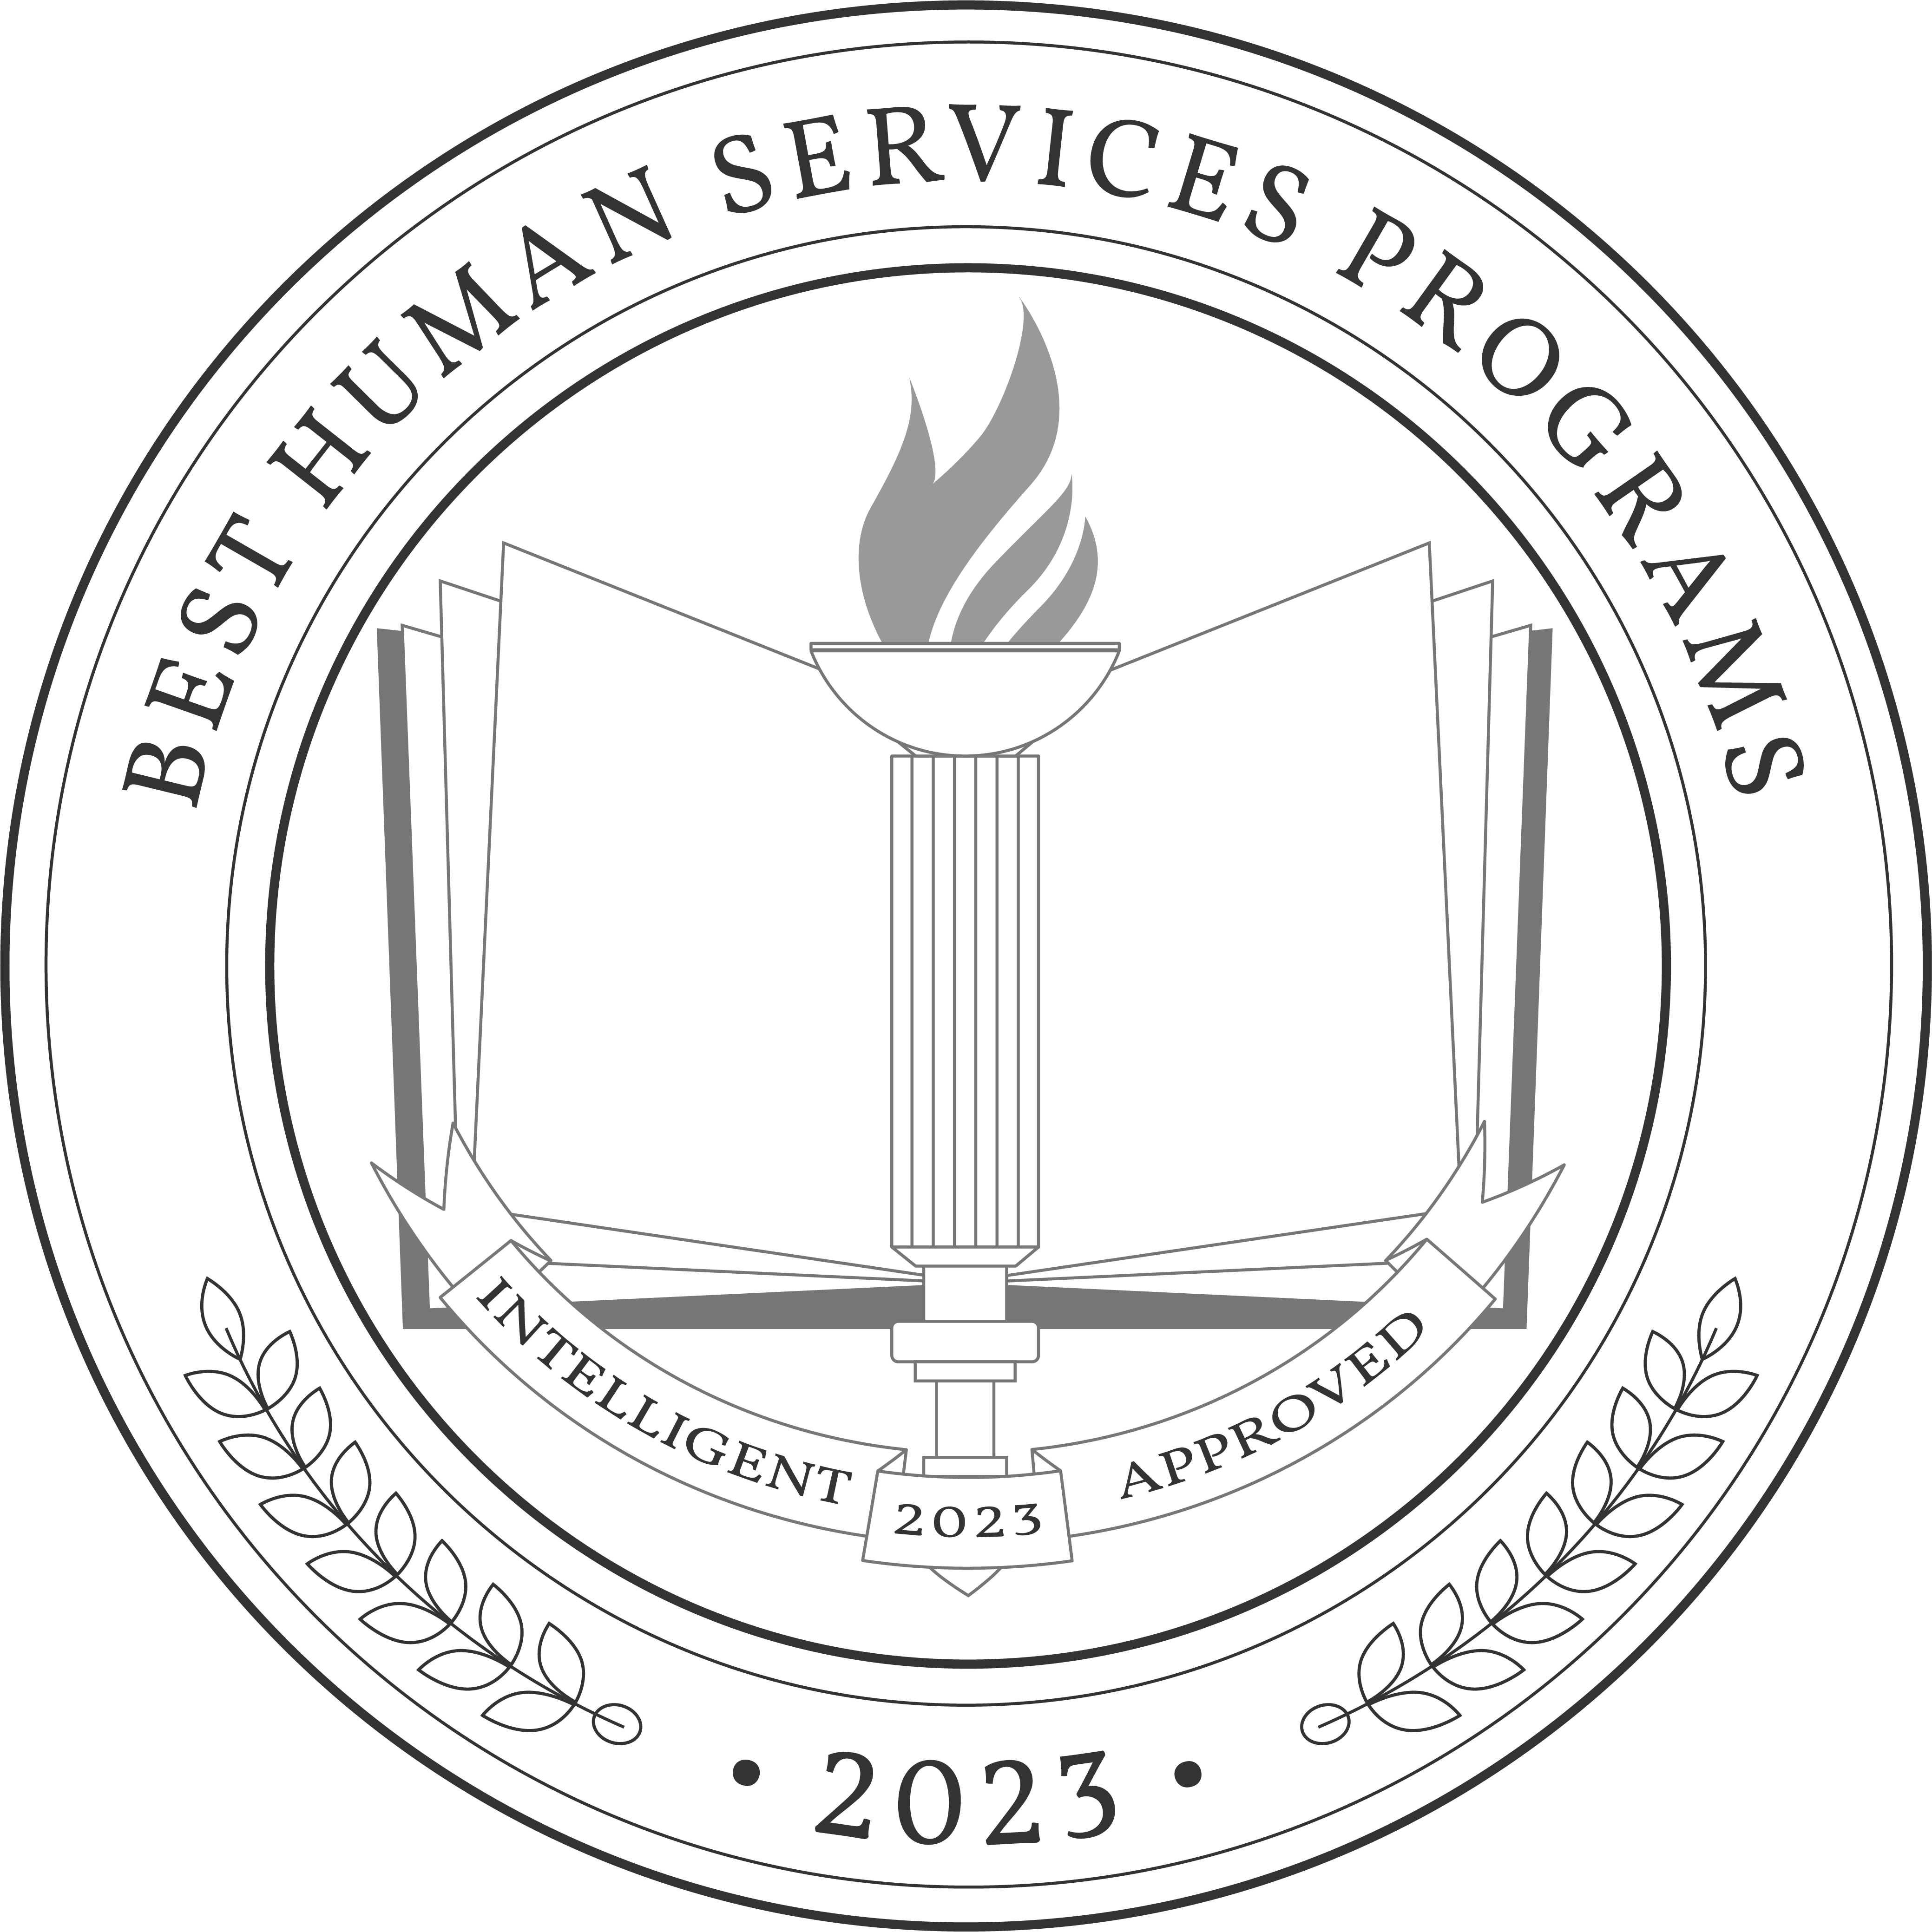 Best Human Services Programs badge